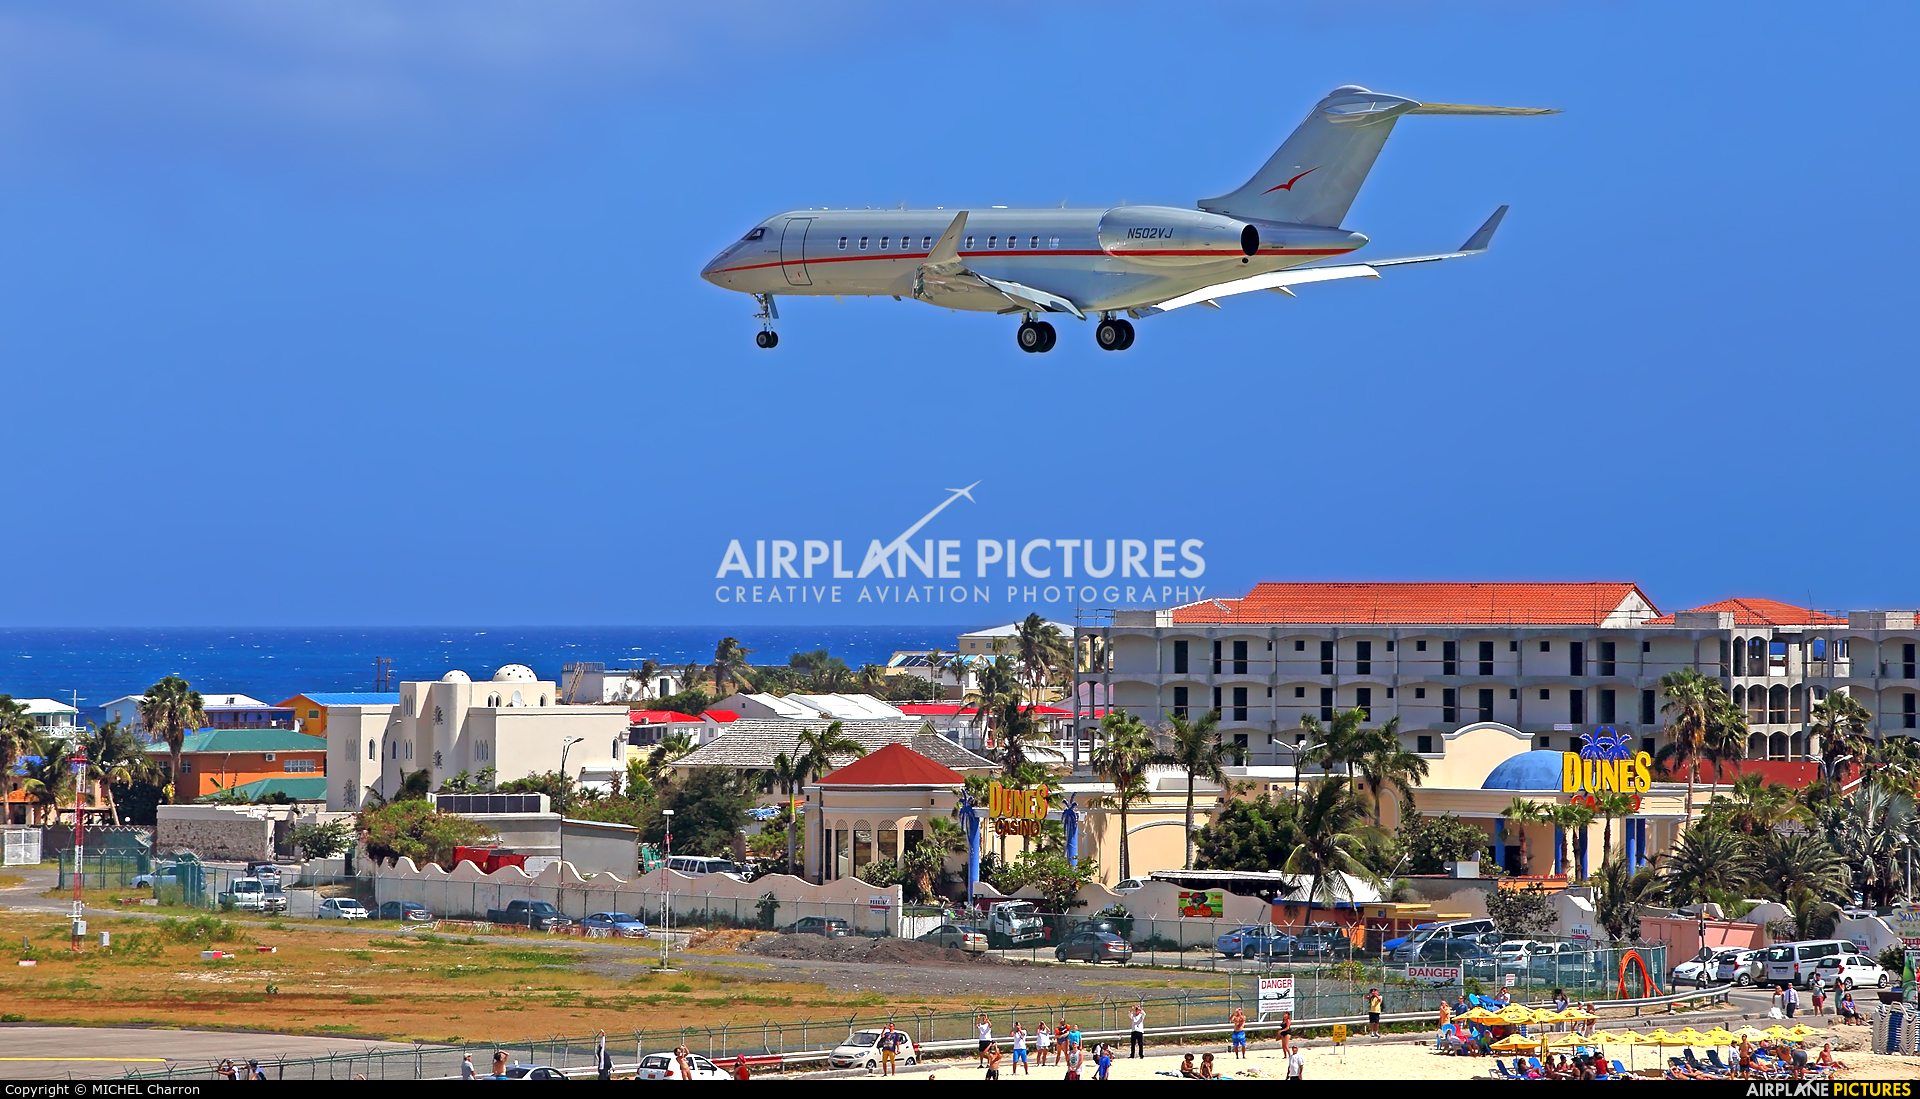 Vistajet N502VJ aircraft at Sint Maarten - Princess Juliana Intl